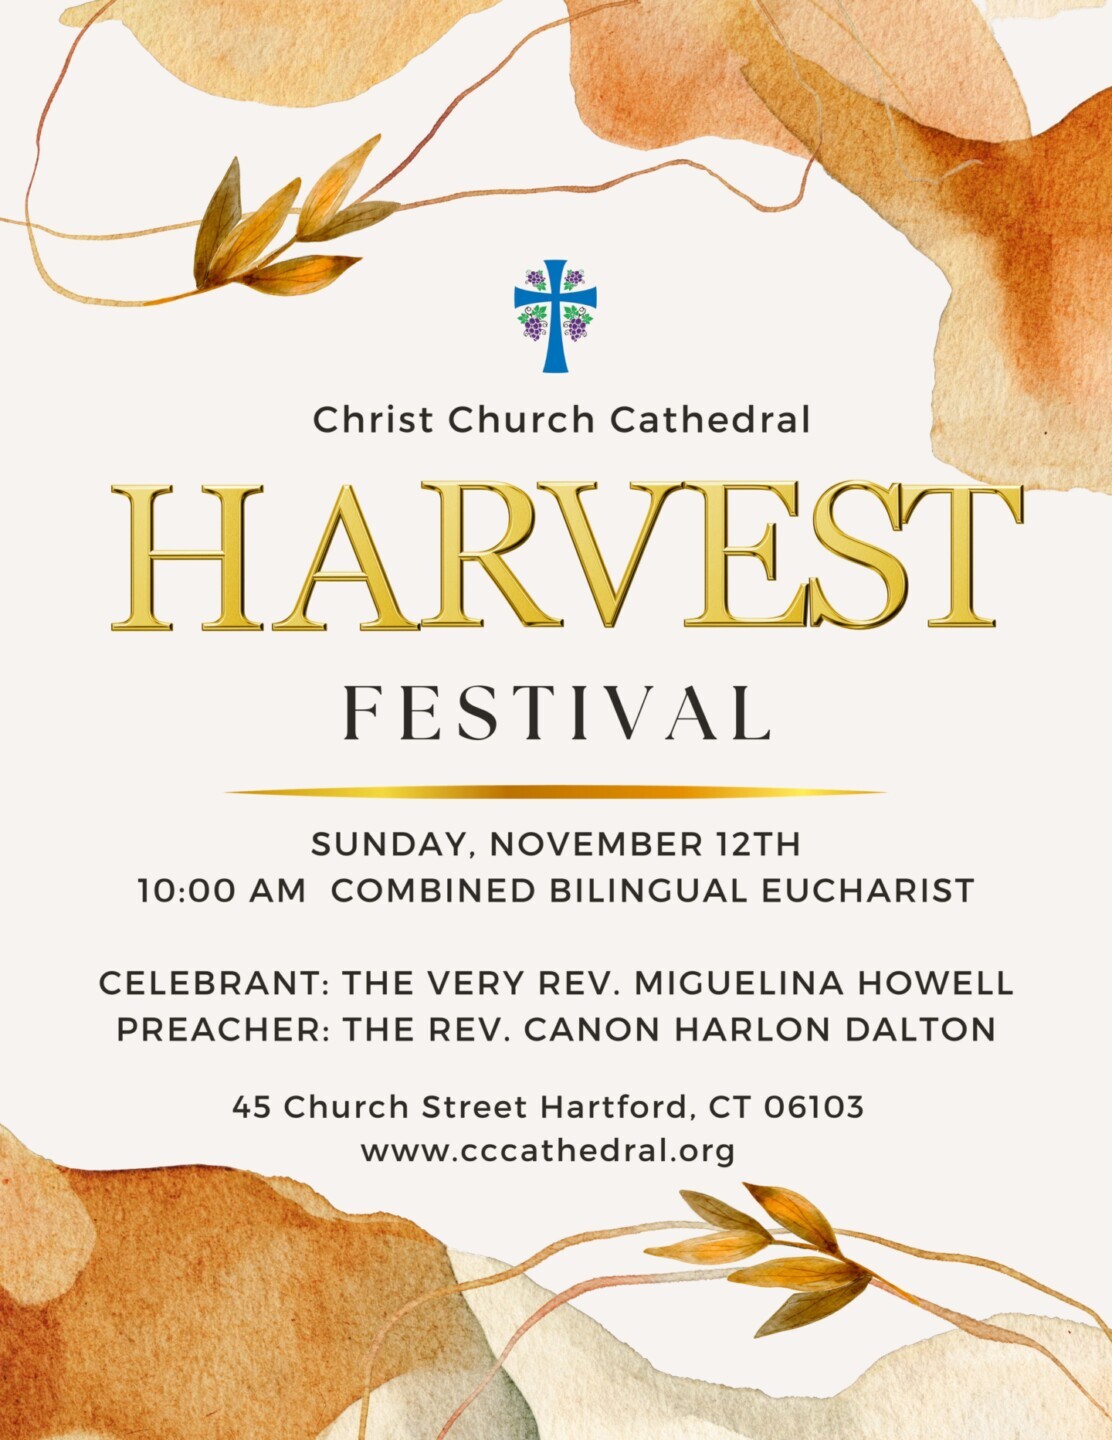 Cathedral Harvest Festival Bilingual Eucharist